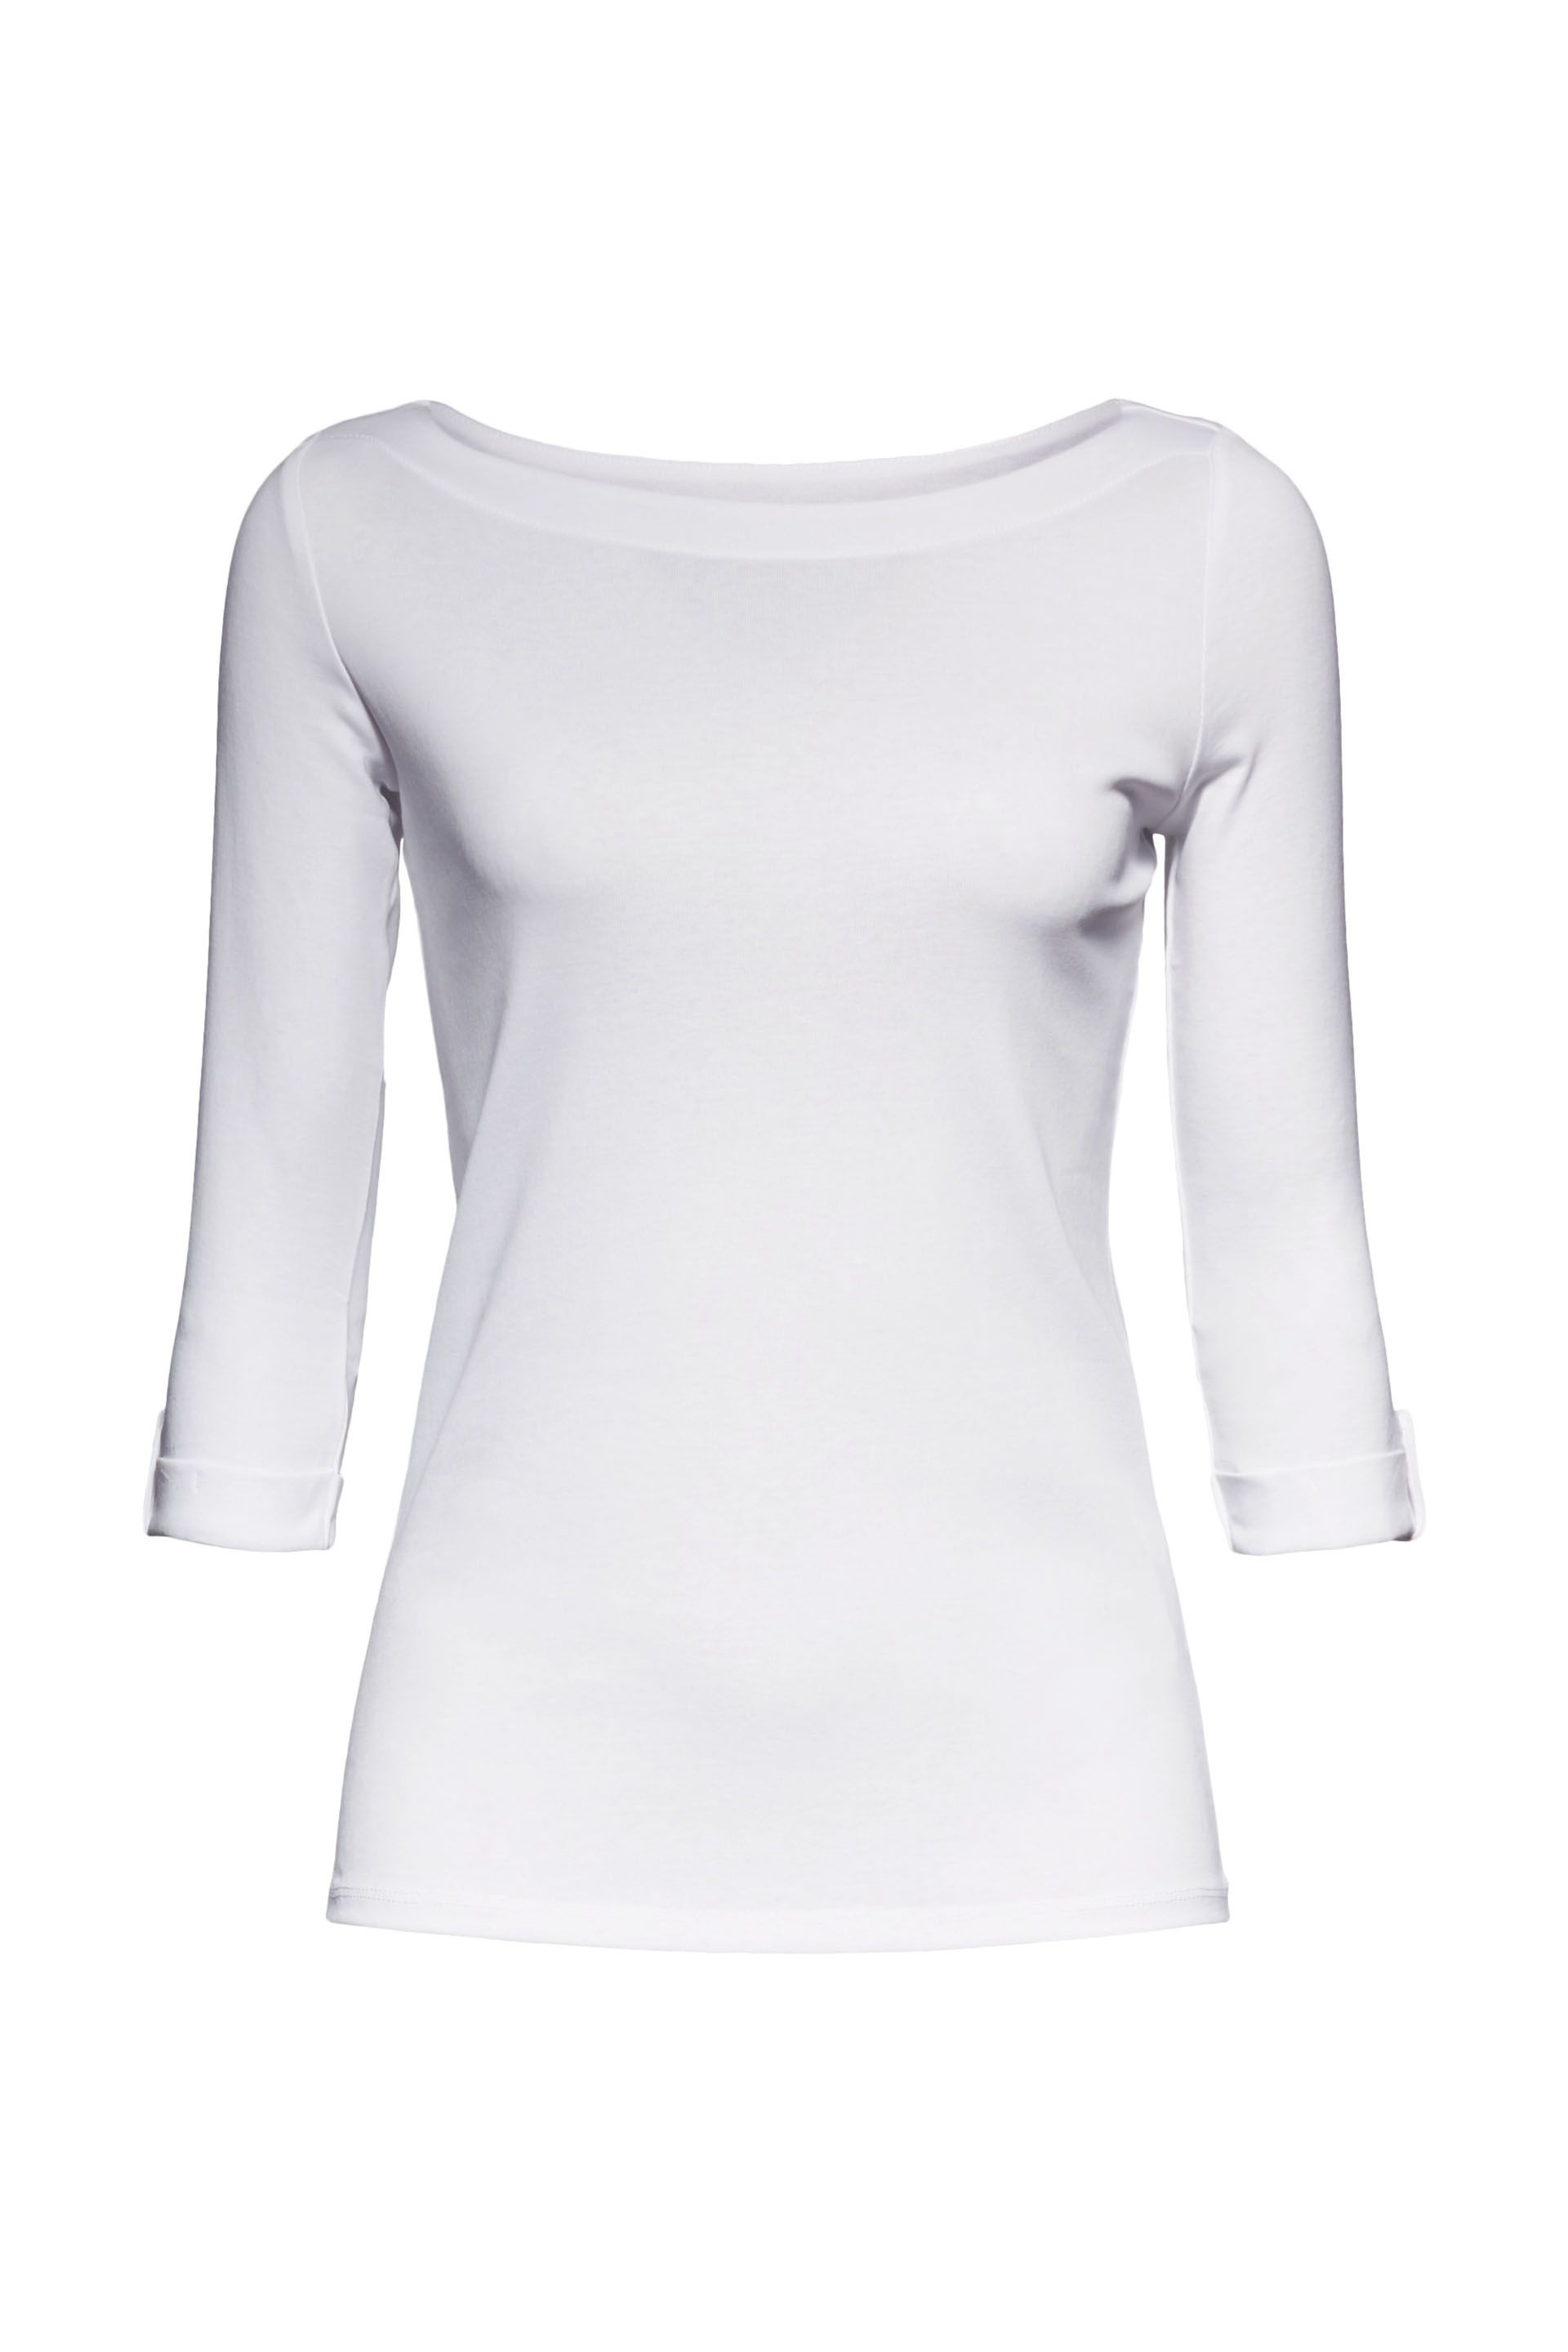 T-shirt a tinta unita con maniche a 3/4, Bianco, large image number 0